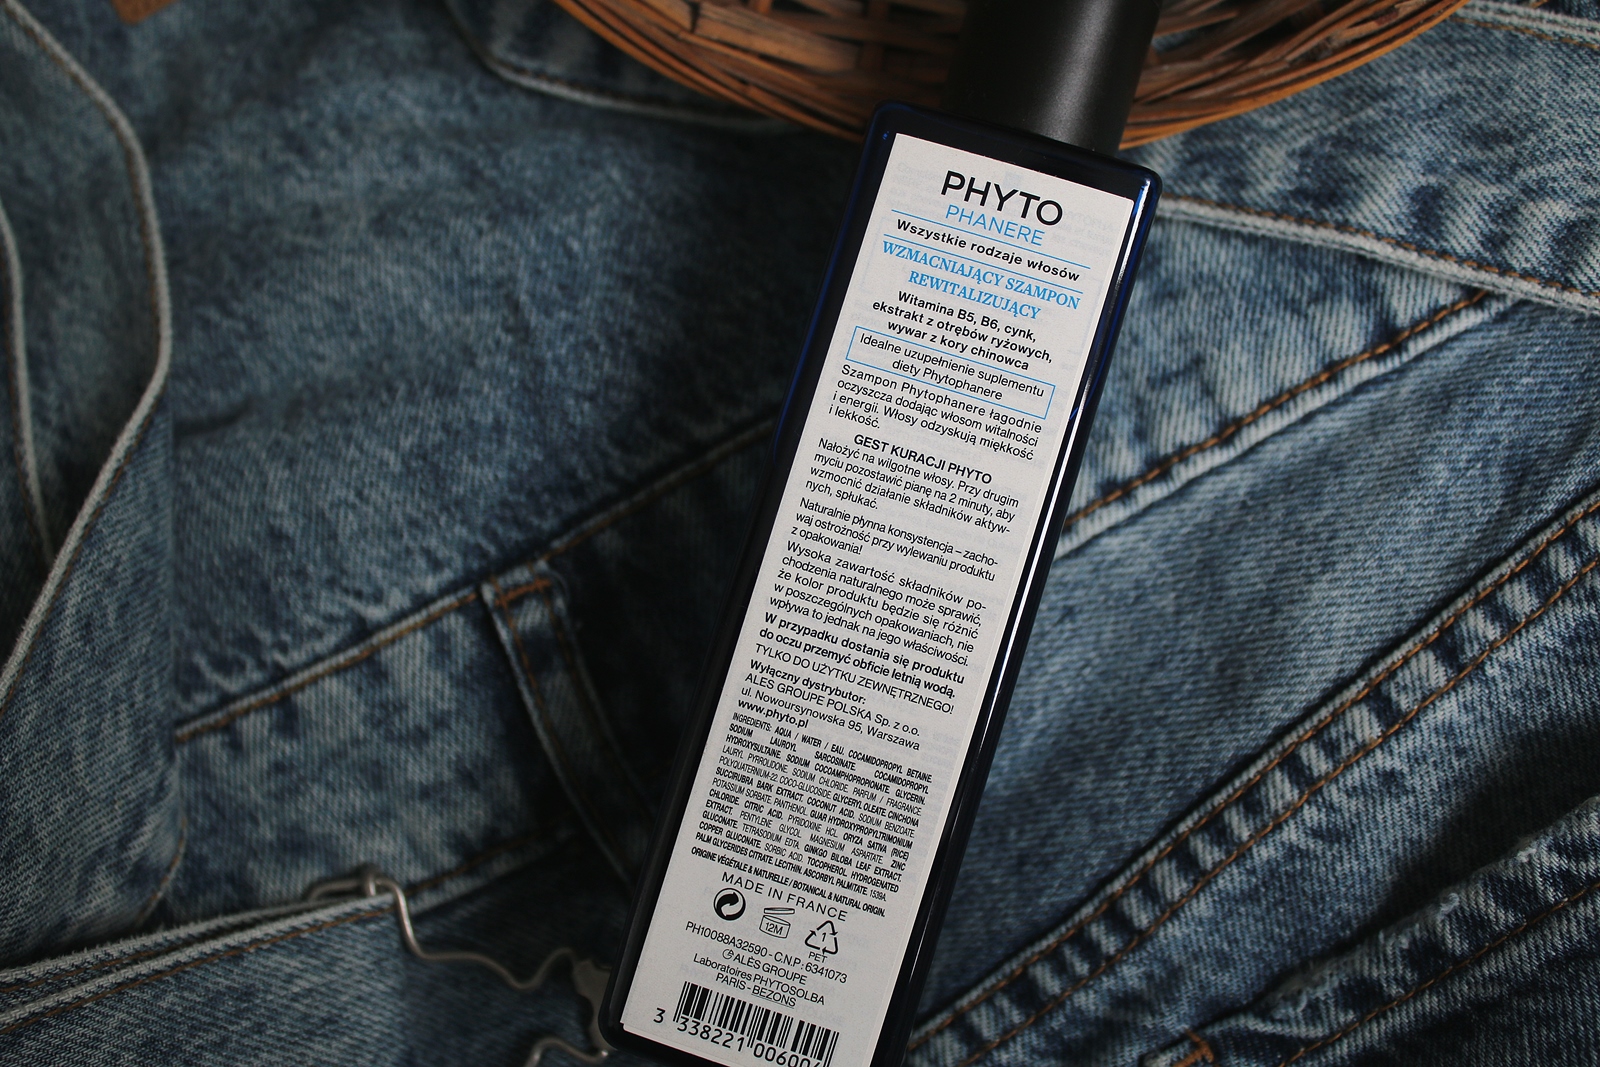 phyto szampon